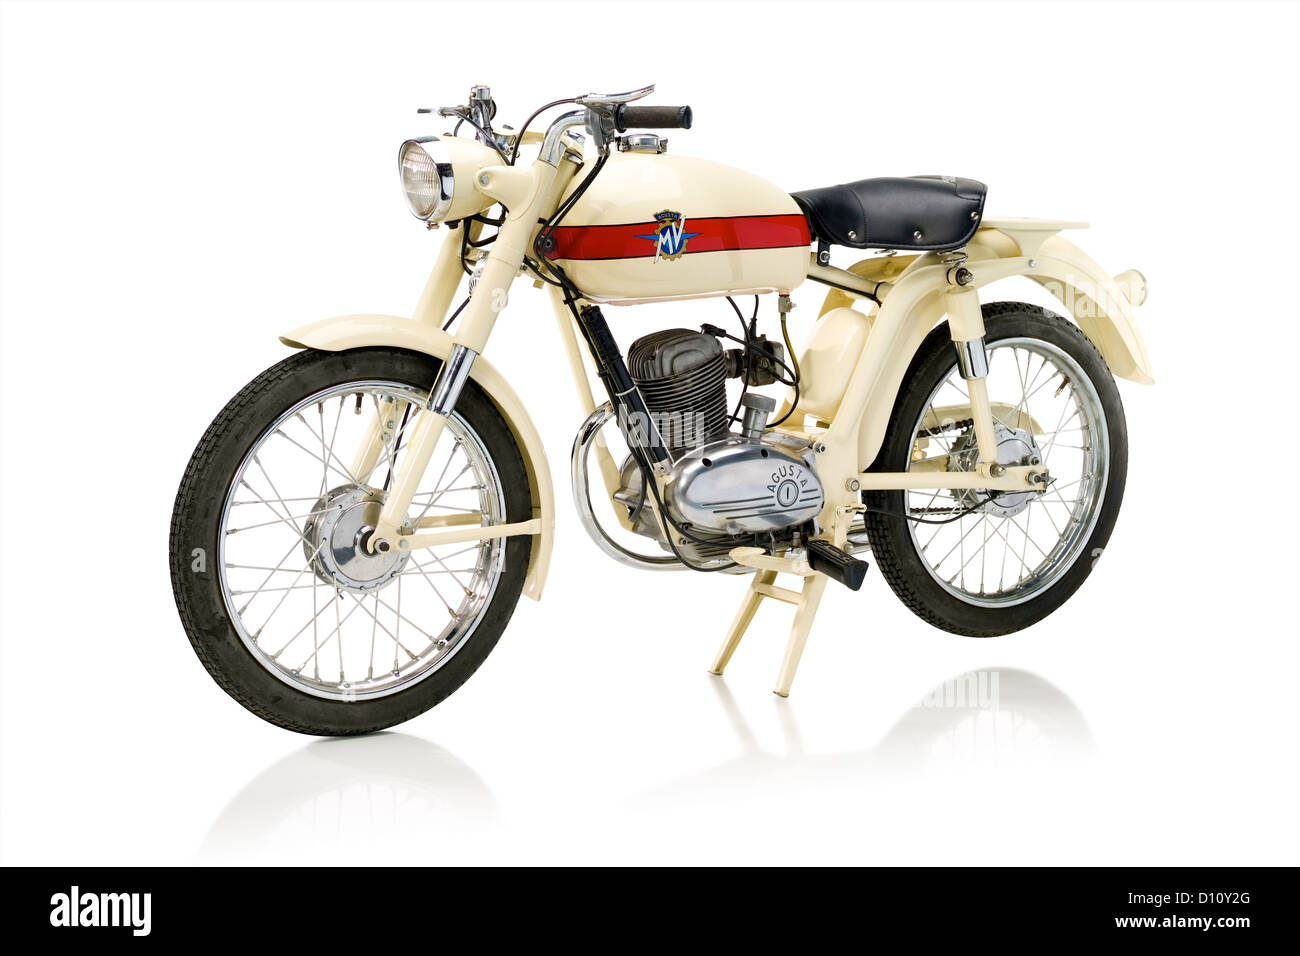 1966 MV Agusta Liberty Turismo motocicletta Foto Stock